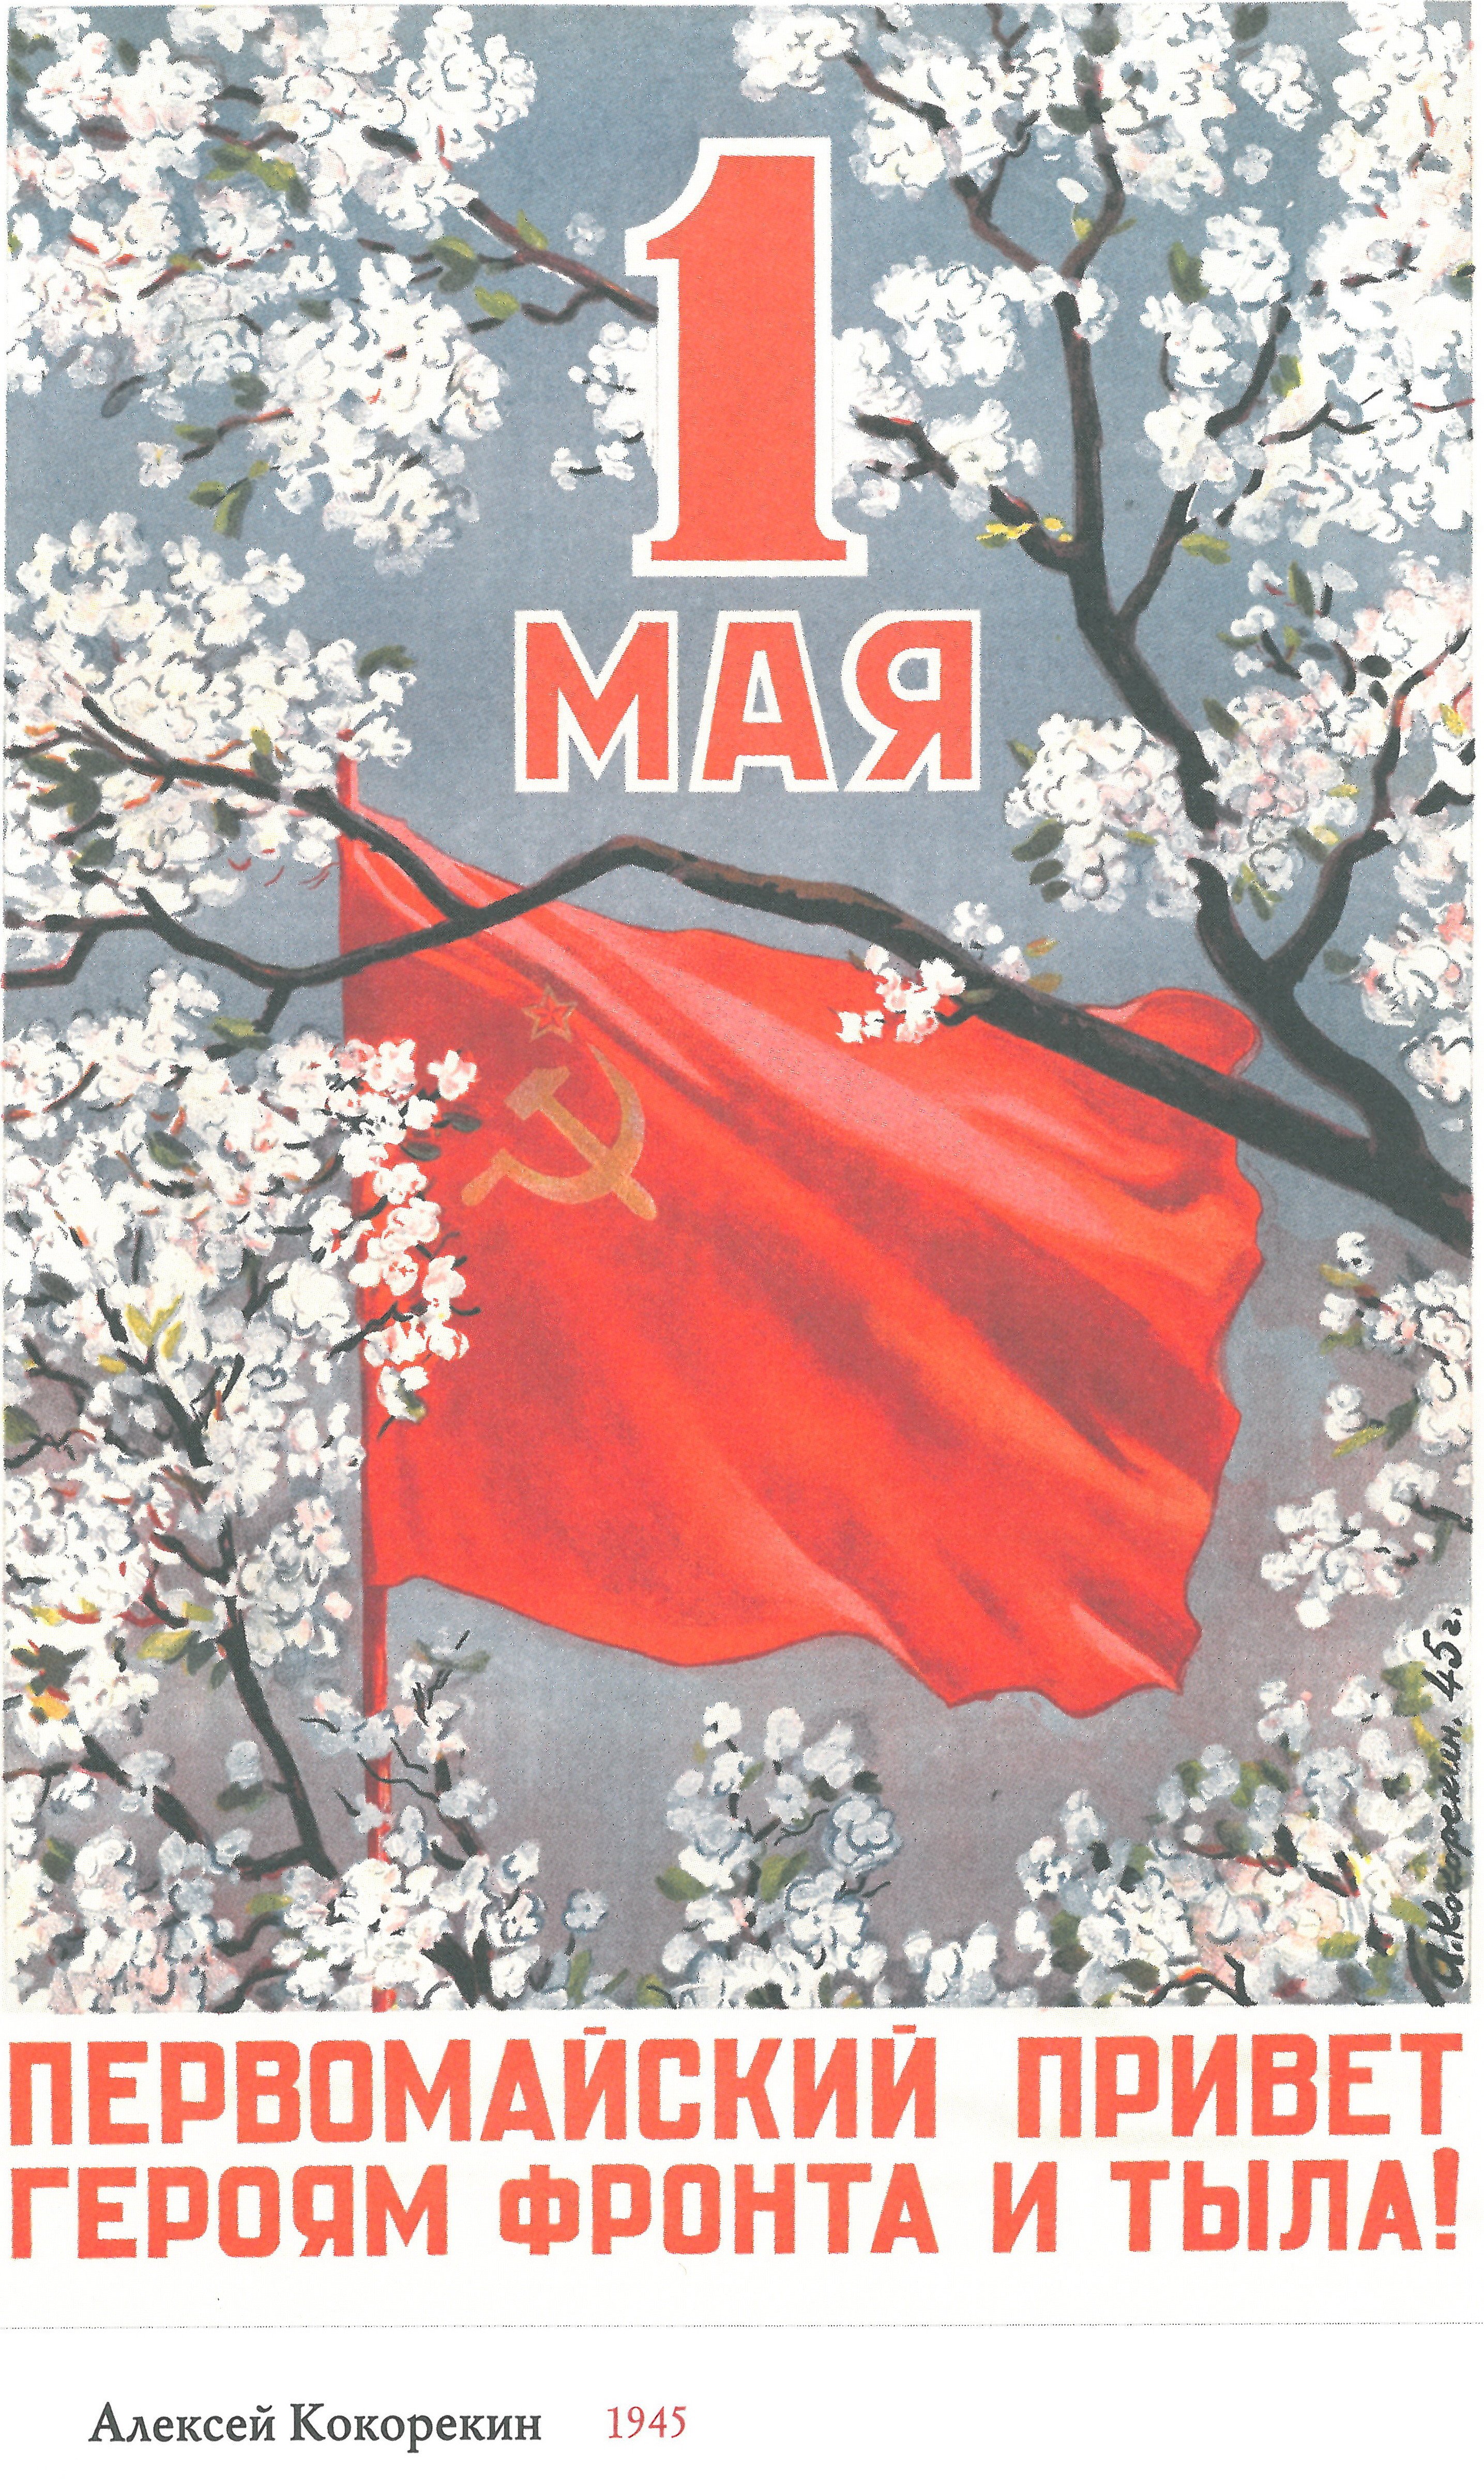 Картинки к 1 мая. 1 Мая. Мир труд май. 1 Мая плакат. 1 Мая советские плакаты.